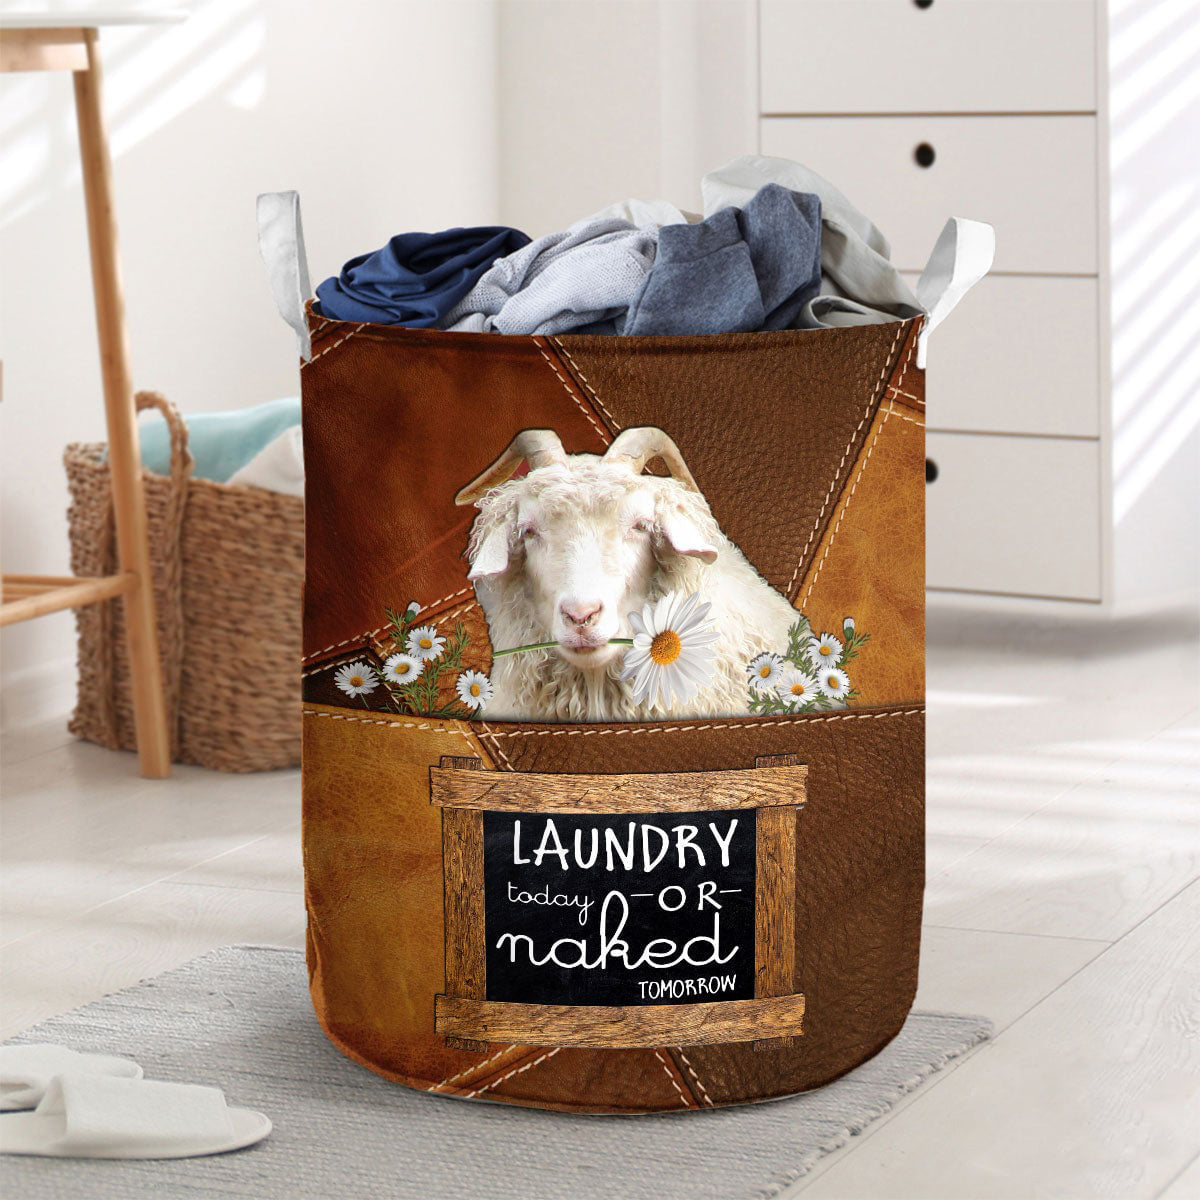 ANGORA-laundry today or naked tomorrow laundry basket